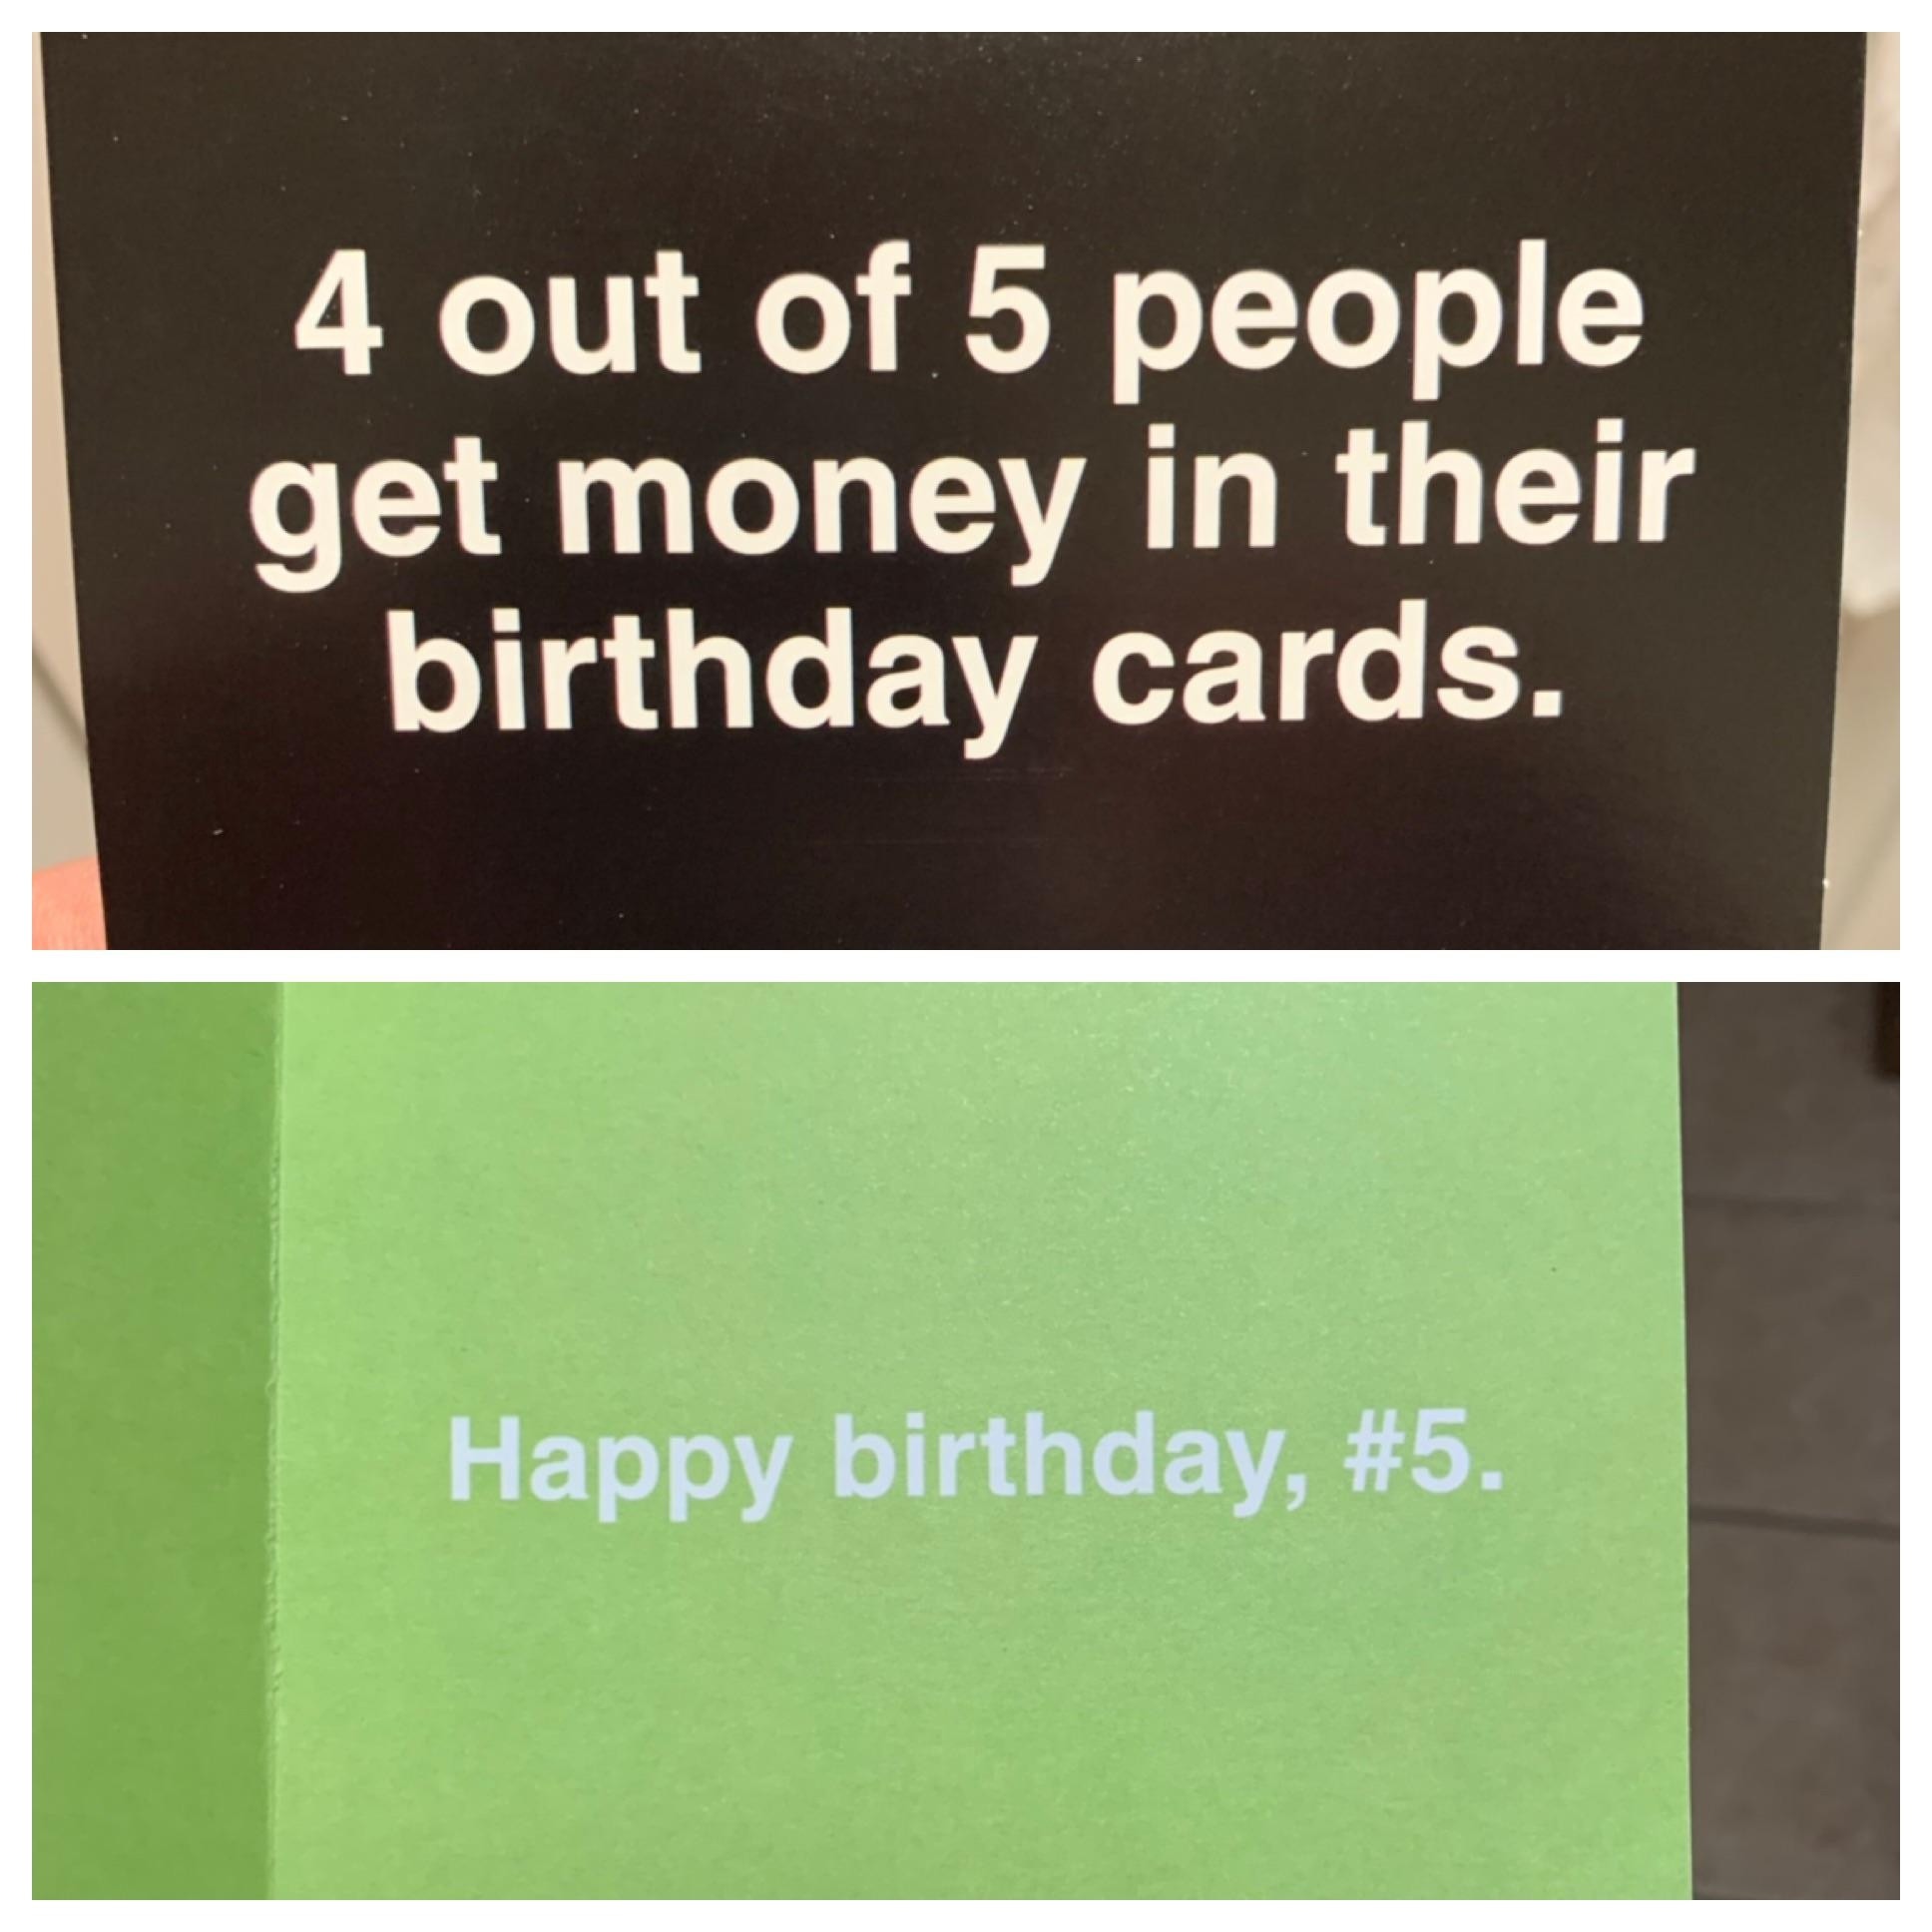 Boss Birthday Card
 Got my boss a birthday card funny